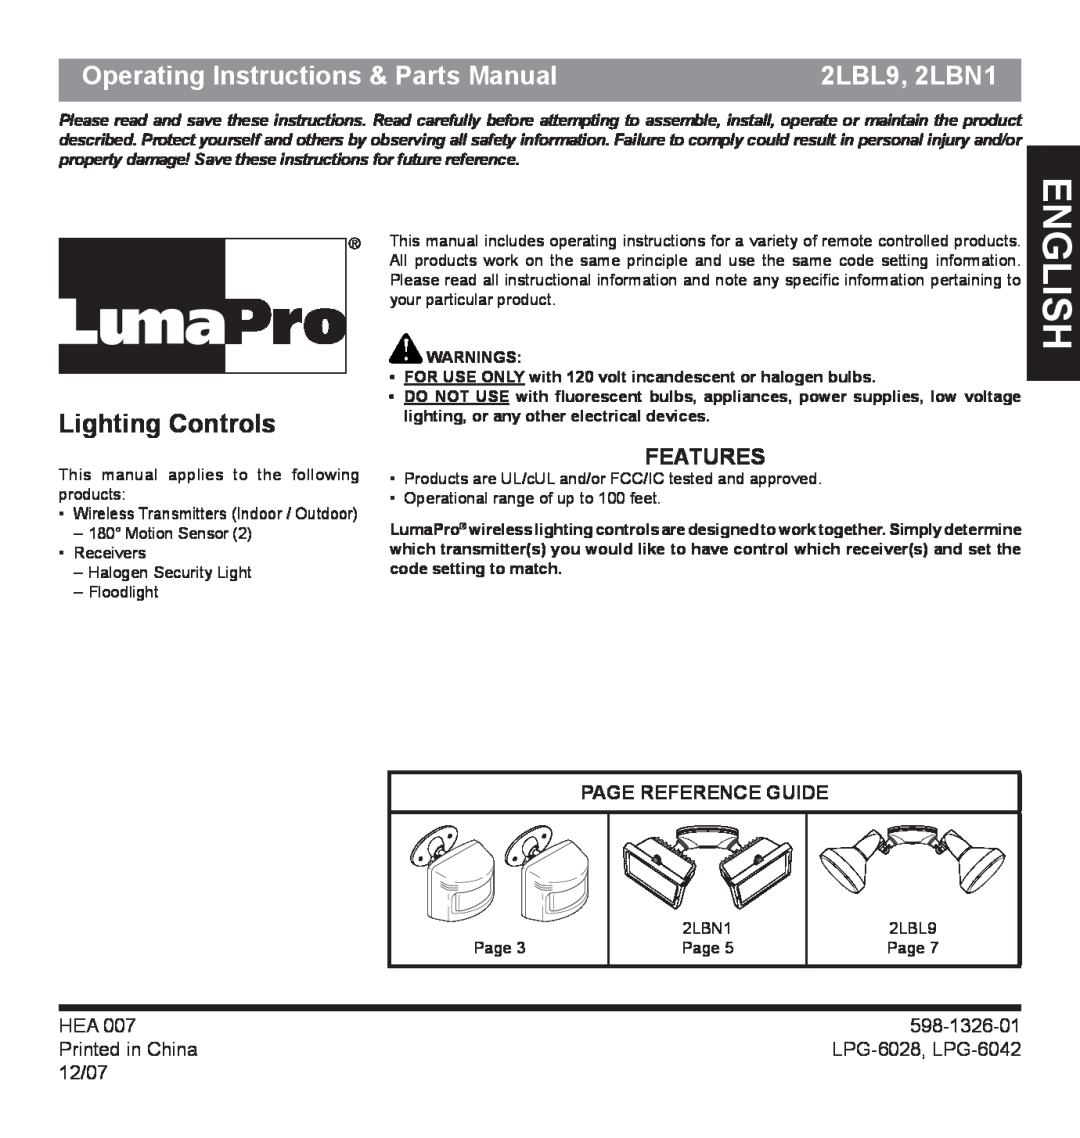 Heath Zenith operating instructions English, Operating Instructions & Parts Manual, 2LBL9, 2LBN1, Lighting Controls 